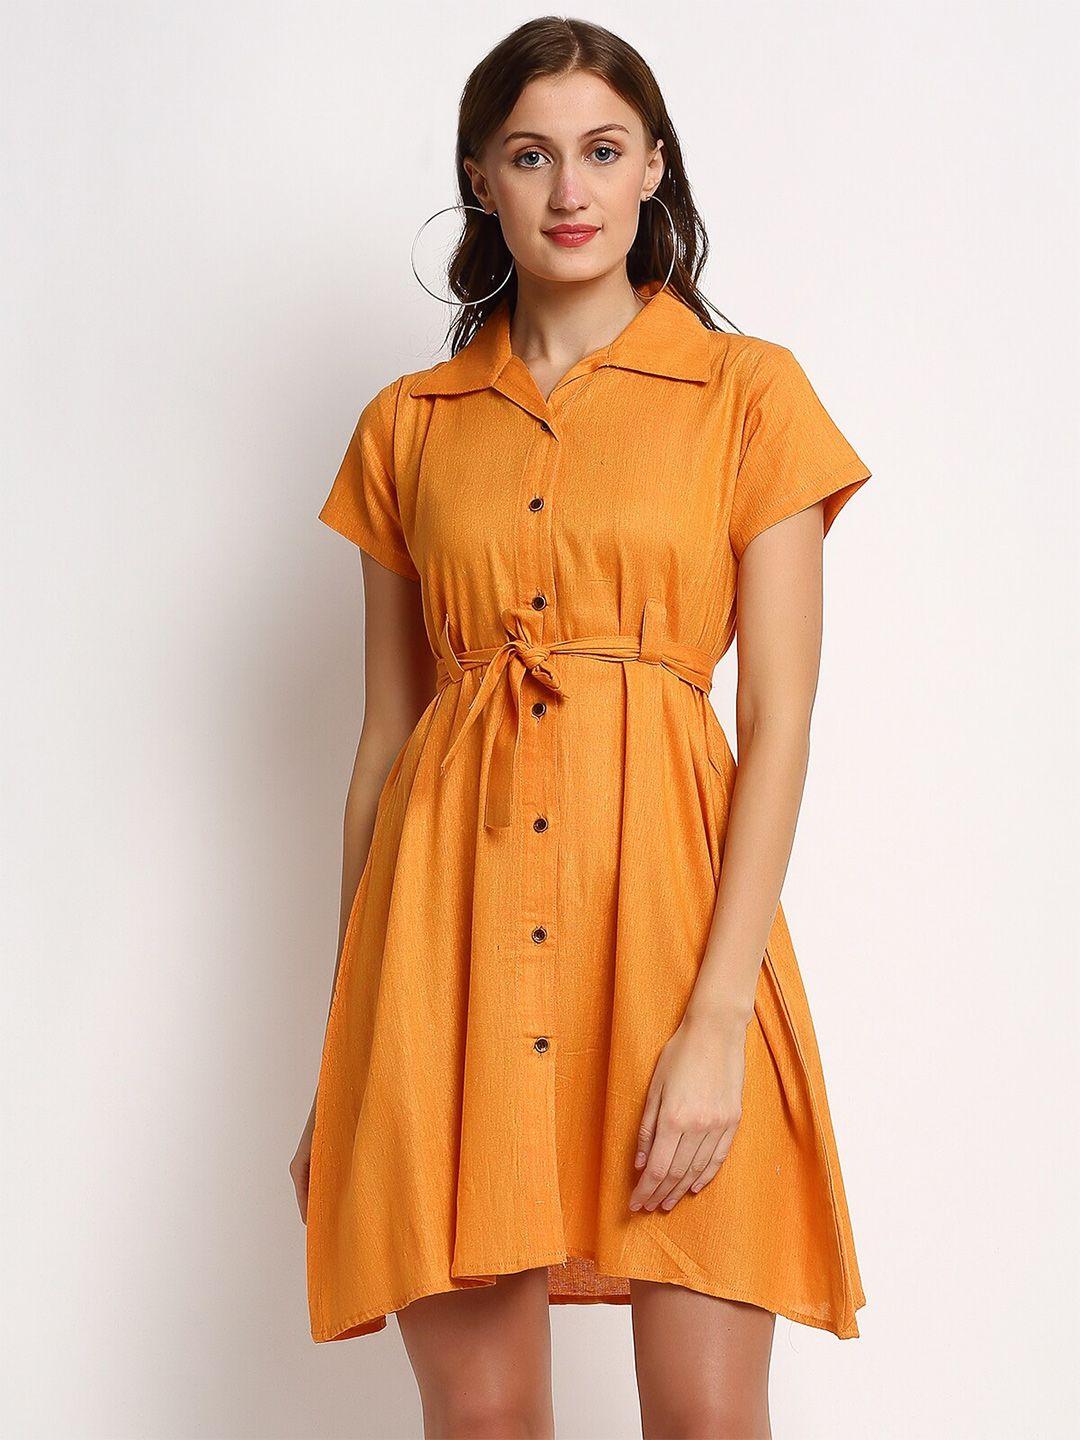 enchanted-drapes-orange-shirt-dress